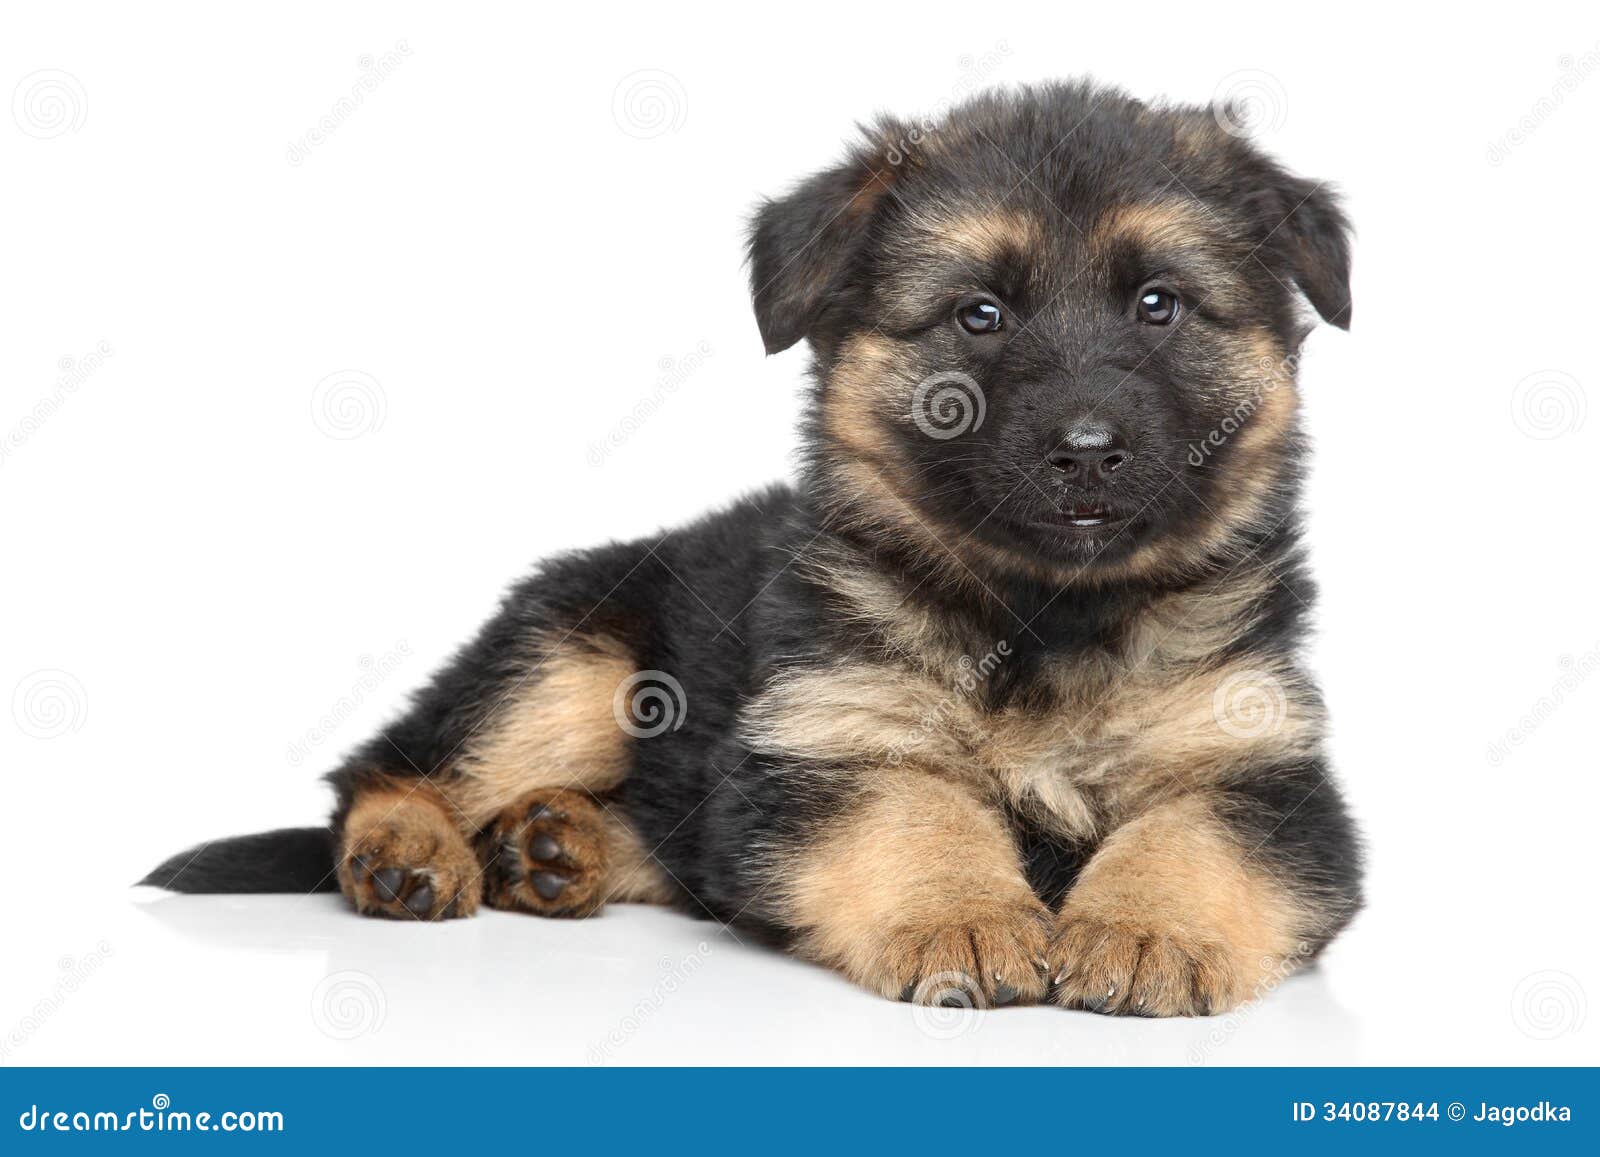 German Shepherd Puppy on White Background Stock Photo - Image of cute ...